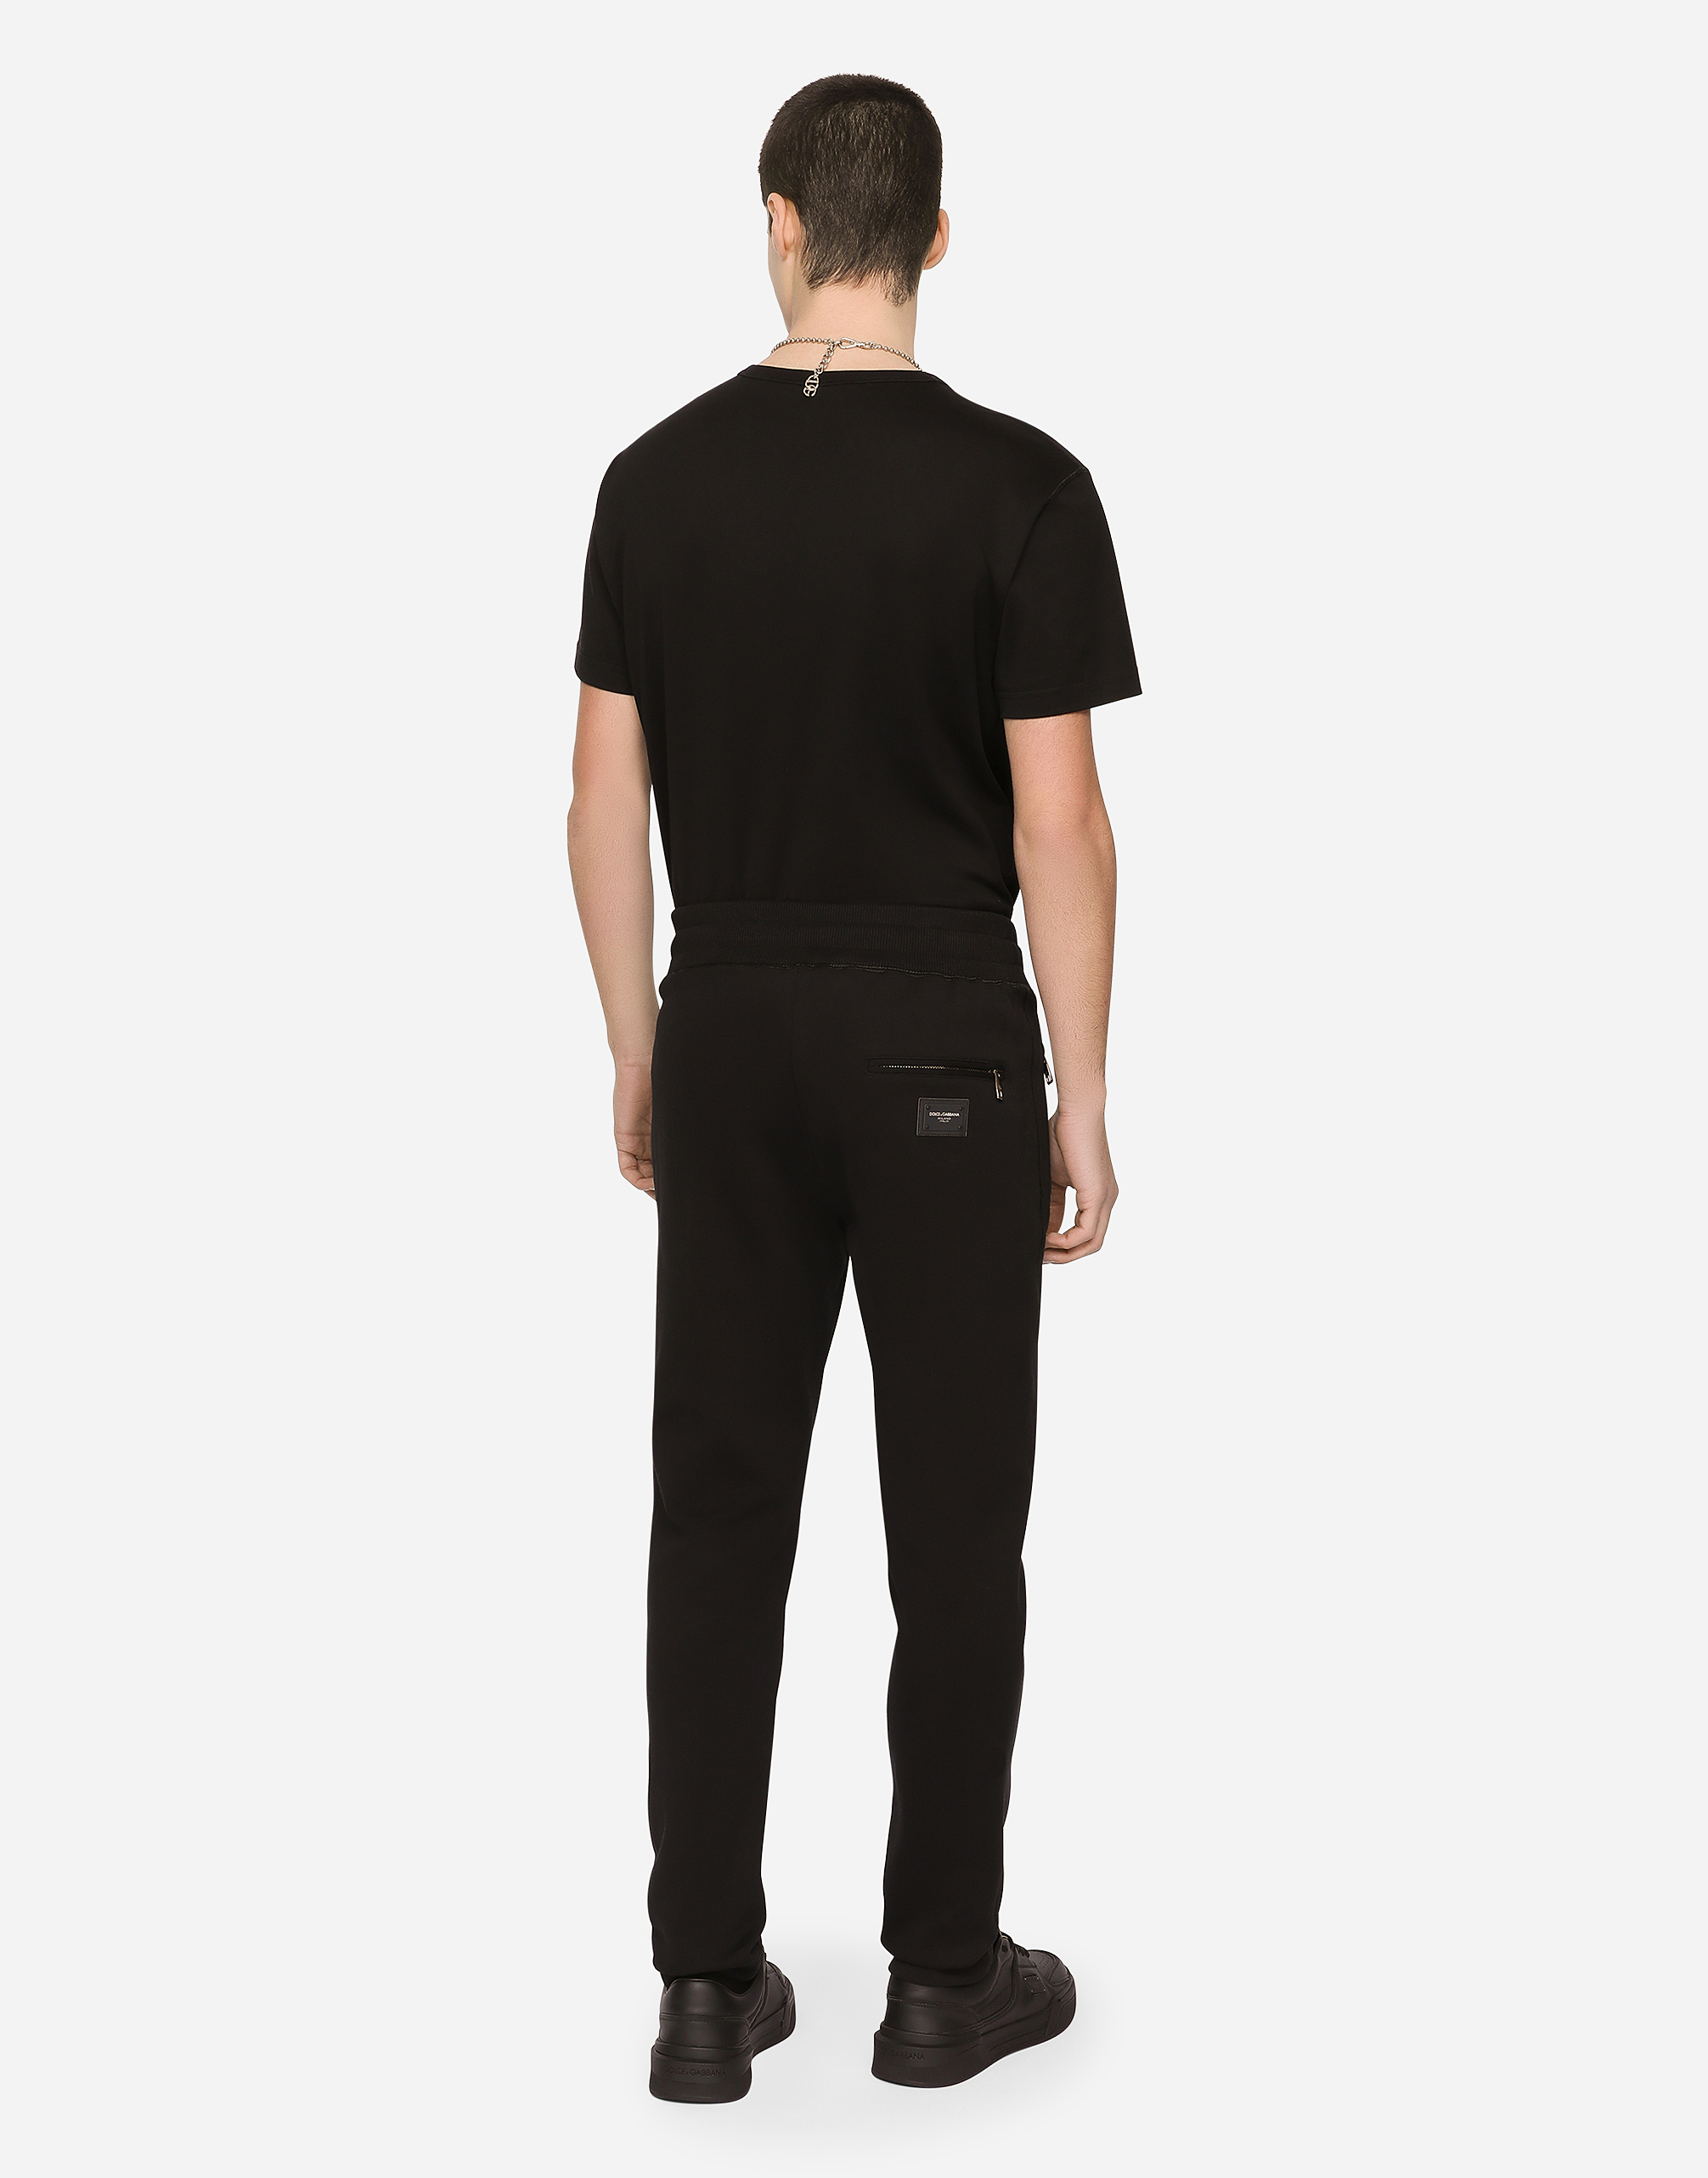 Bonus Portico Forbid Cotton T-shirt with branded tag in Black for Men | Dolce&Gabbana®